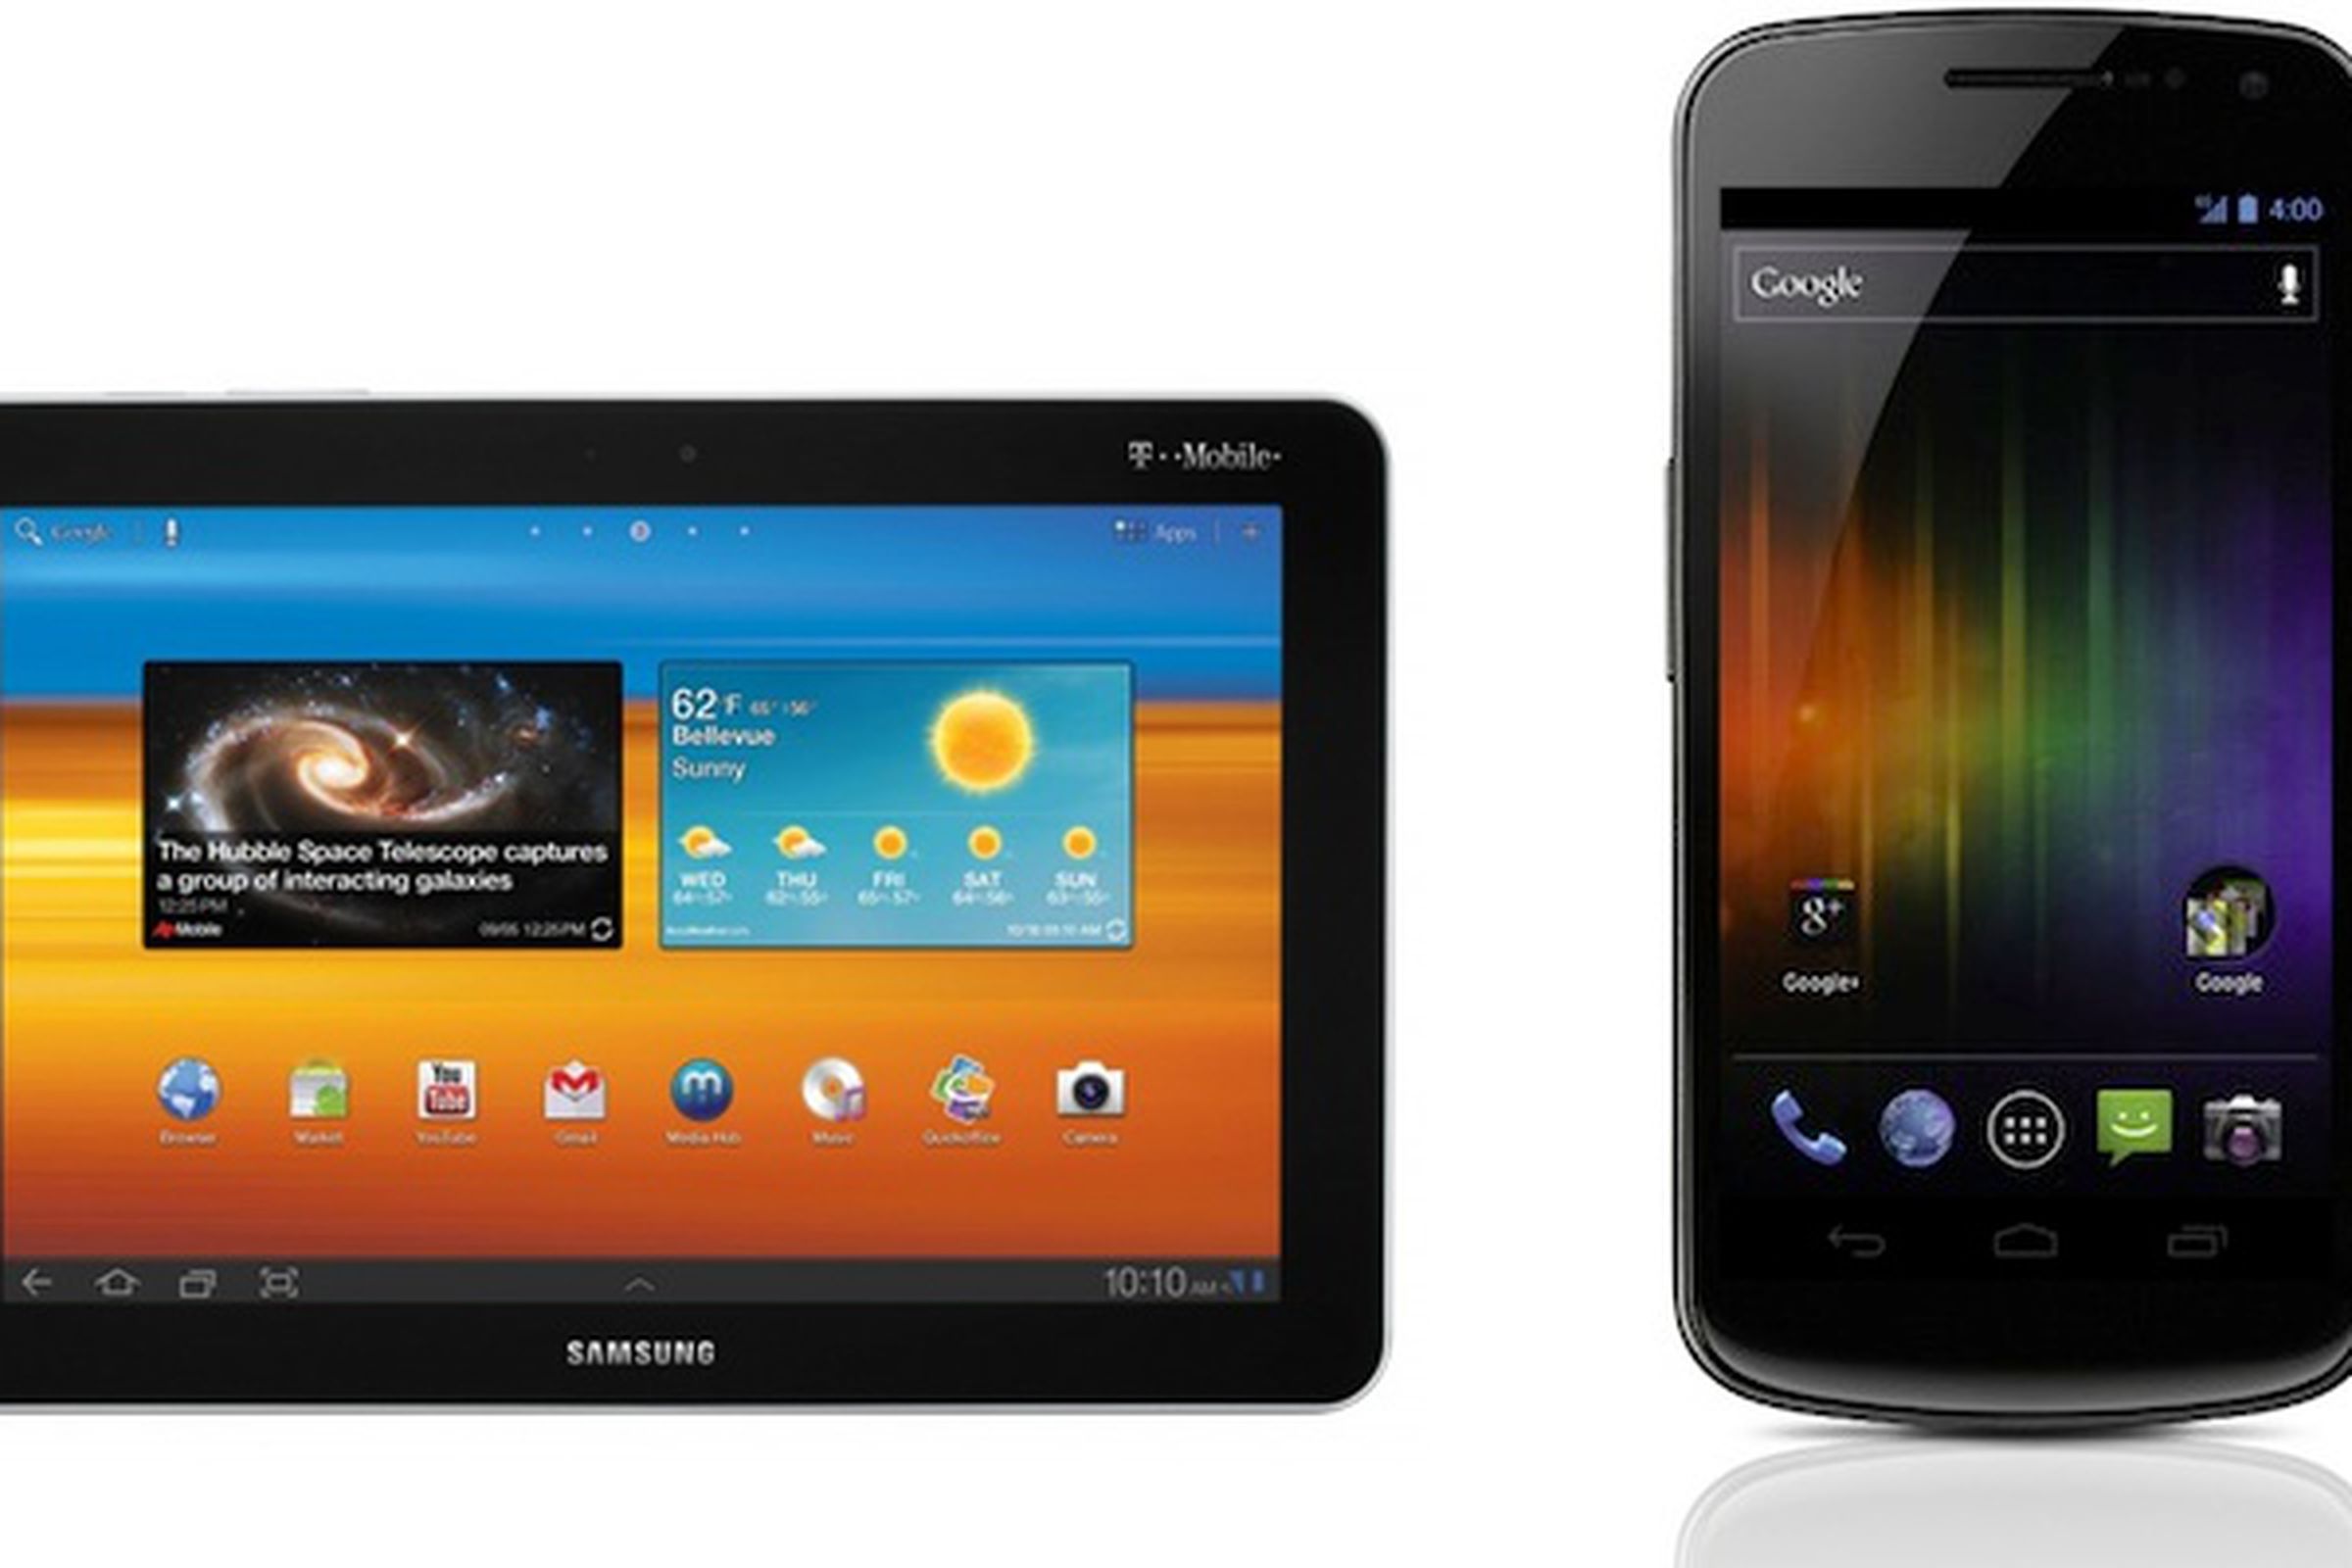 Galaxy Tab and Galaxy Nexus